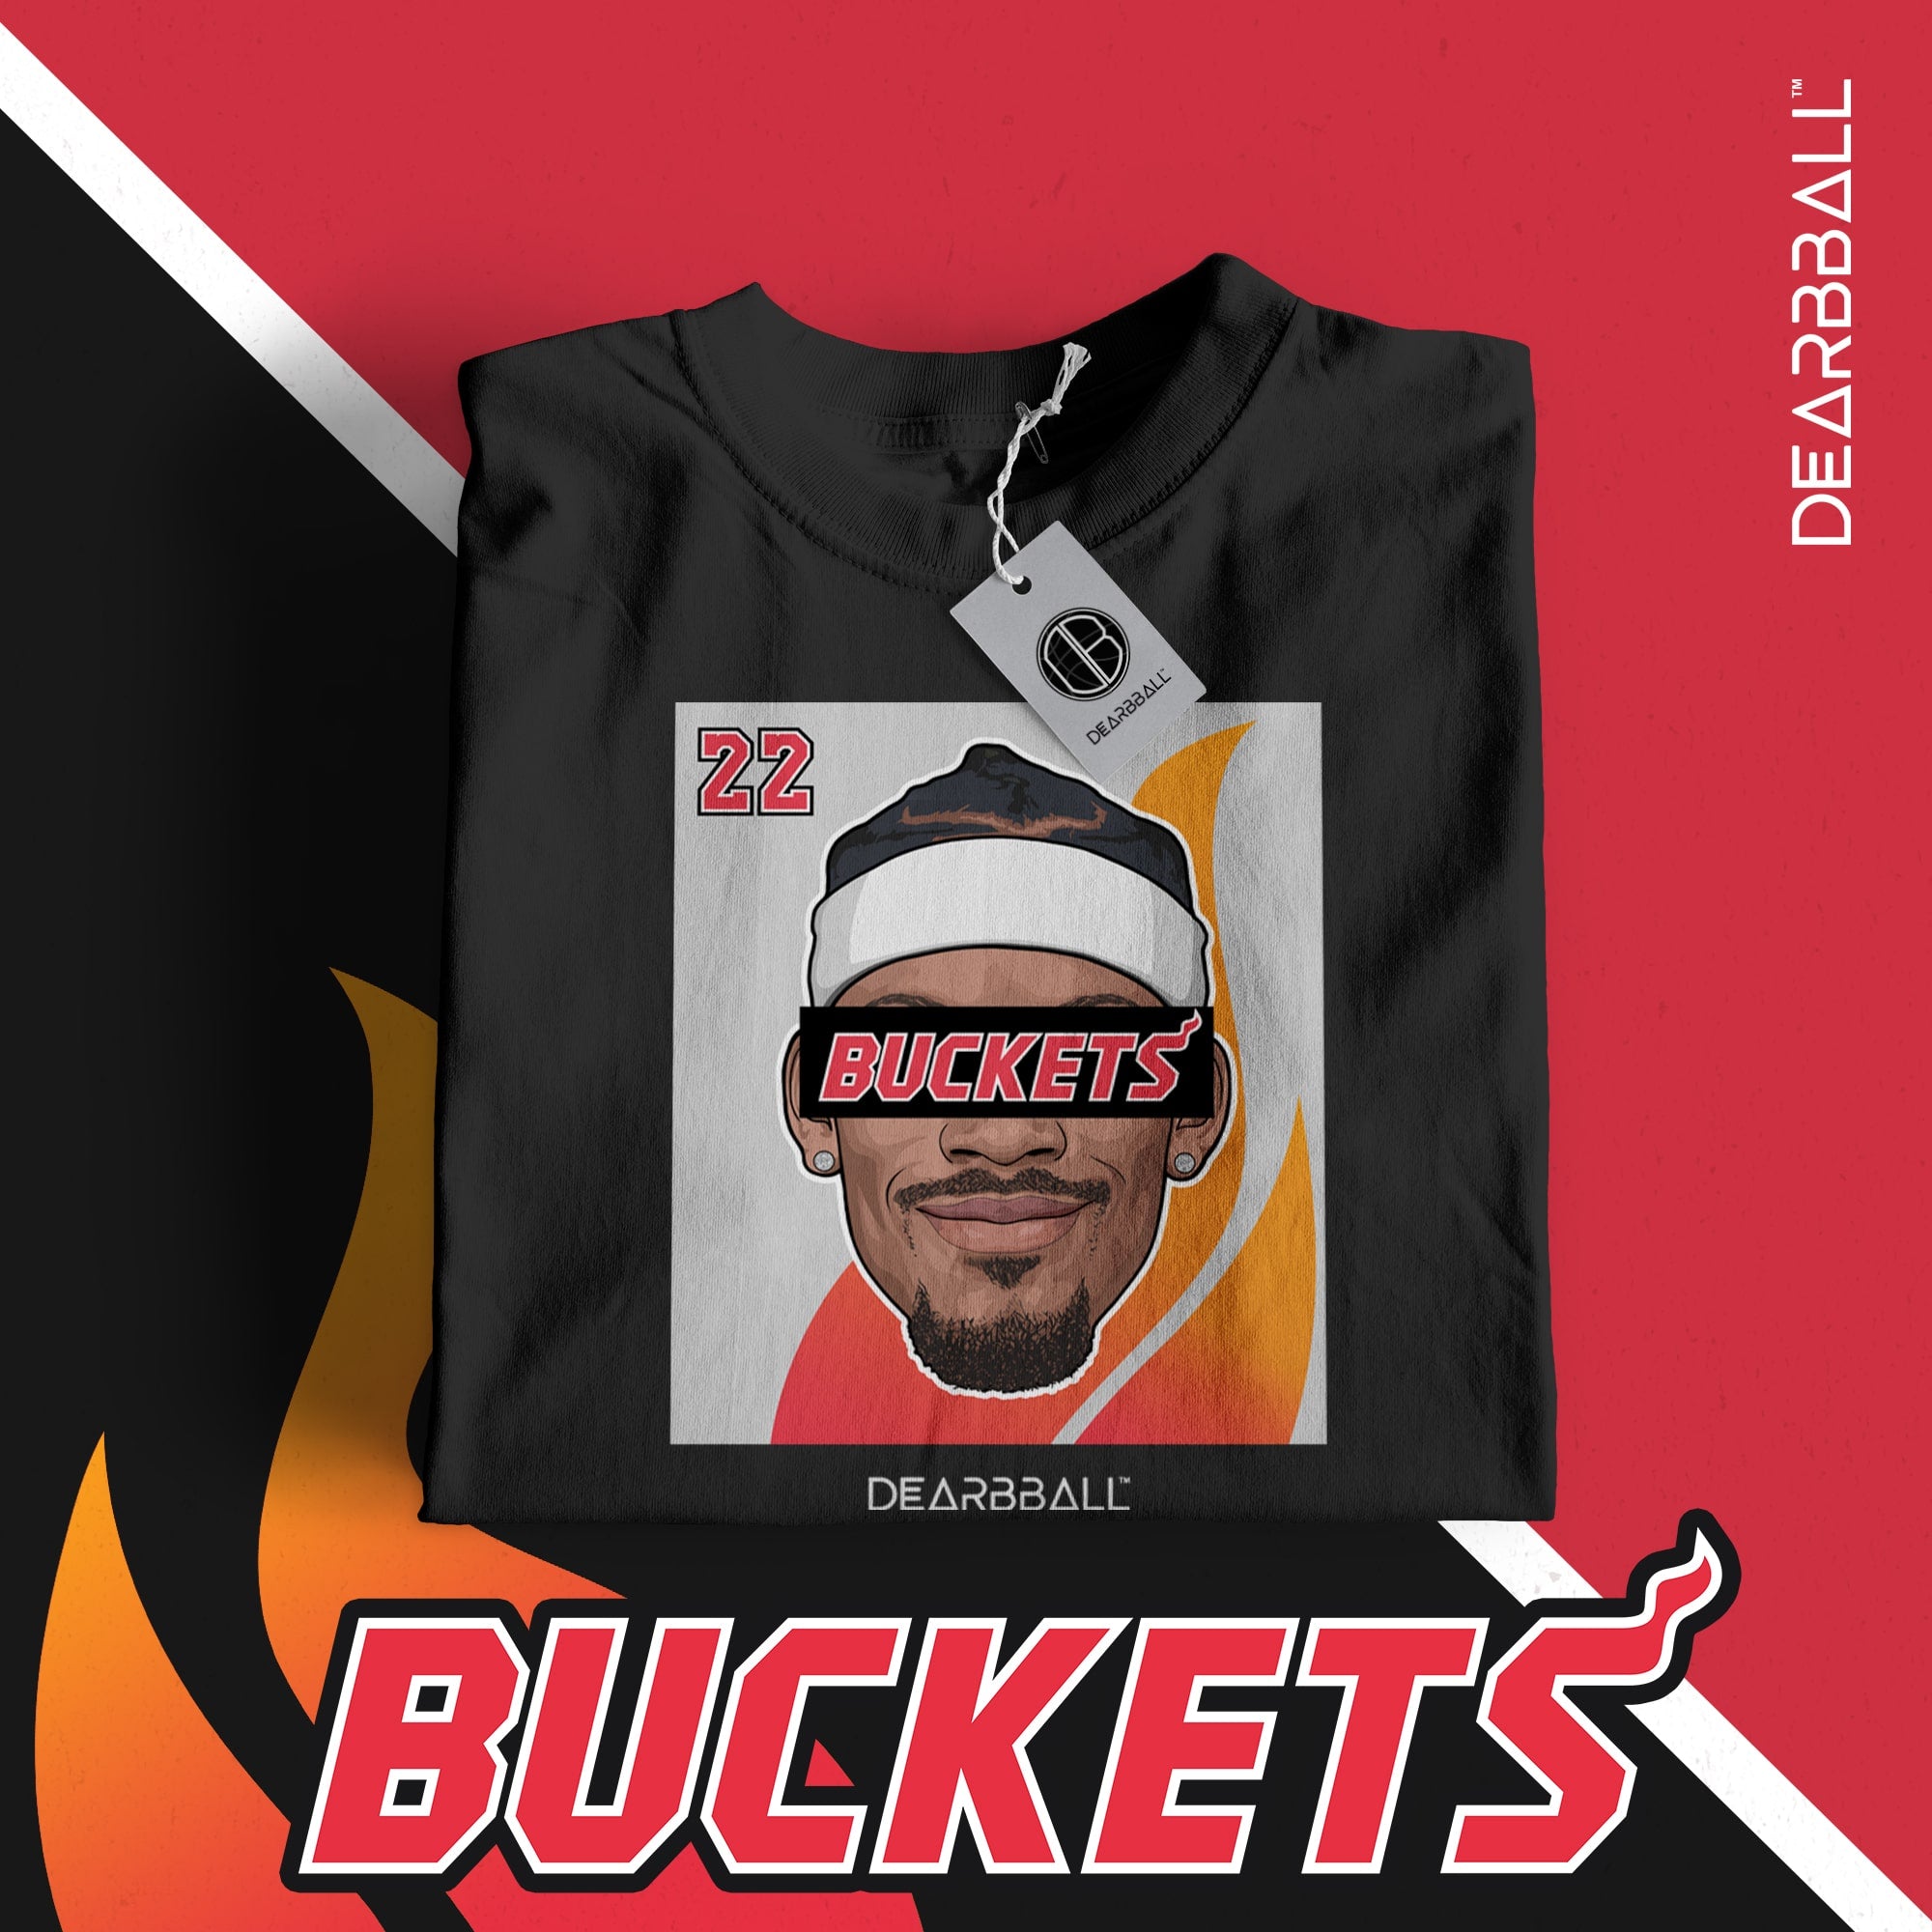 [Niño] Camiseta DearBBall - BUCKETS 22 Flame Edition